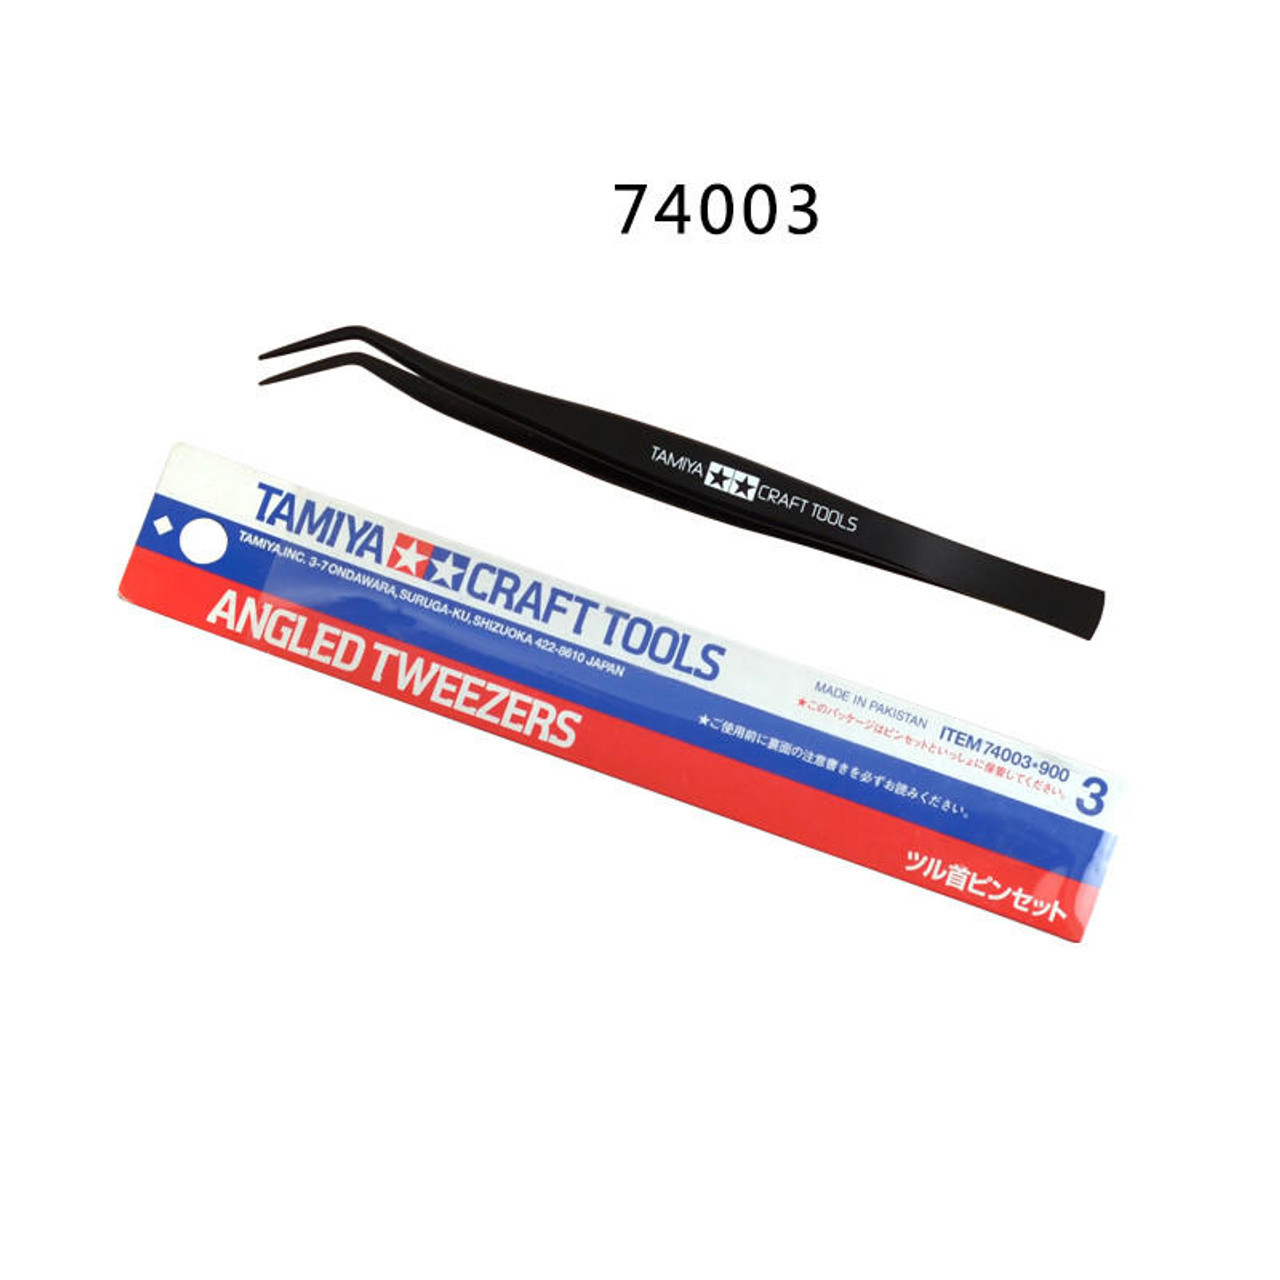 Angled Tweezers 74003